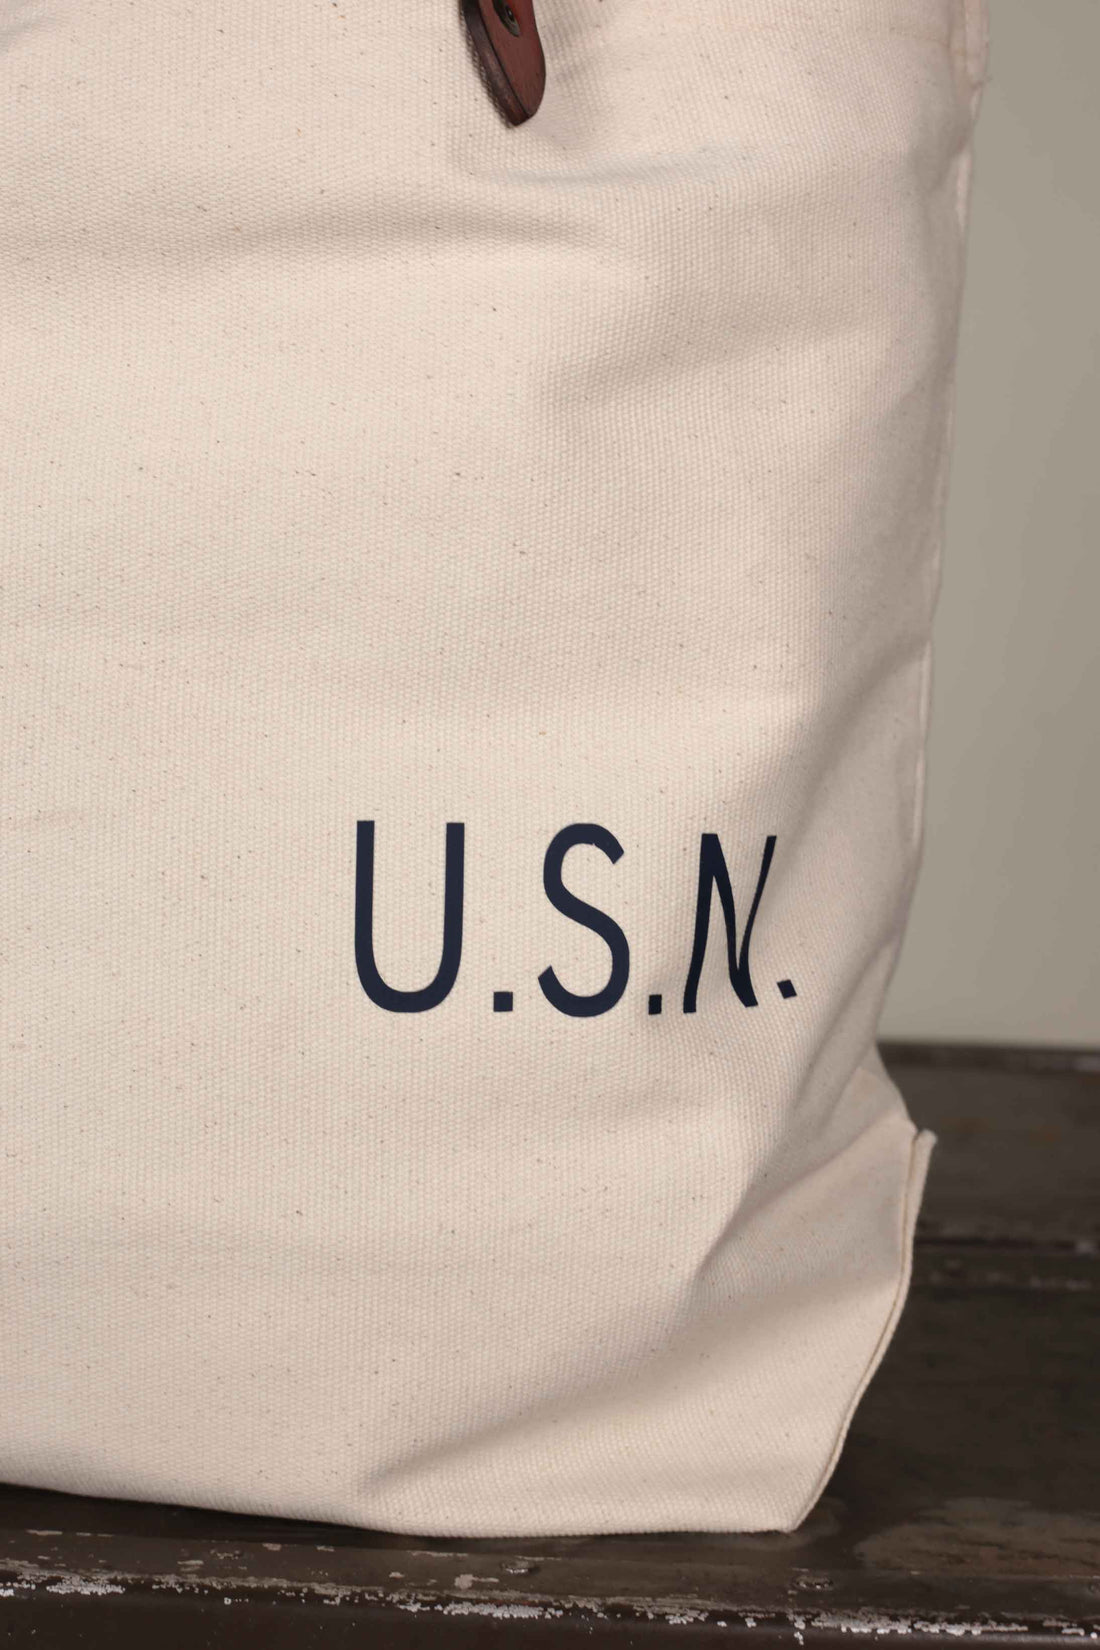 Tote Bag U.S.N